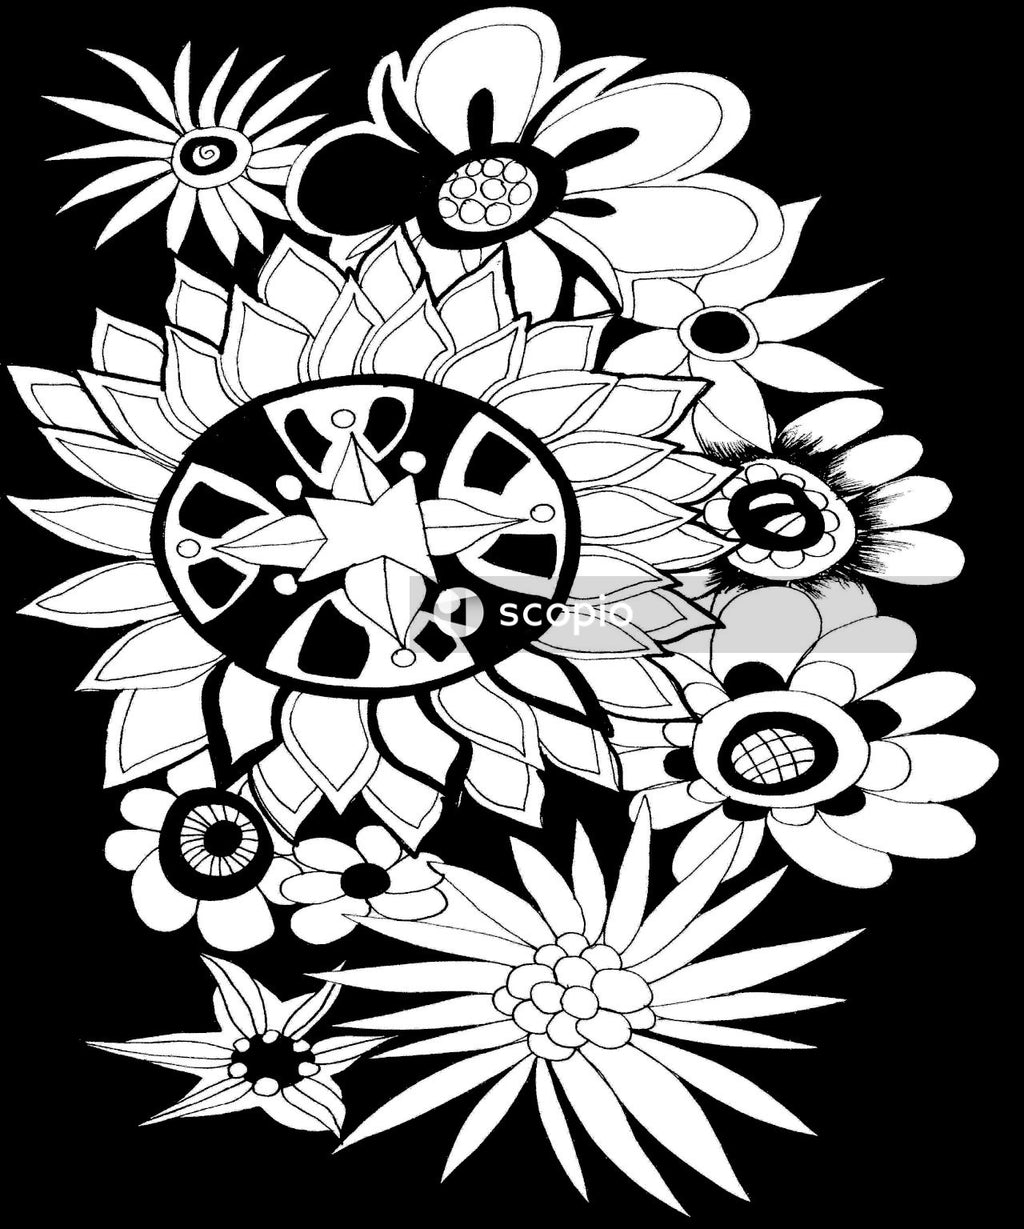 Black and white floral illustration